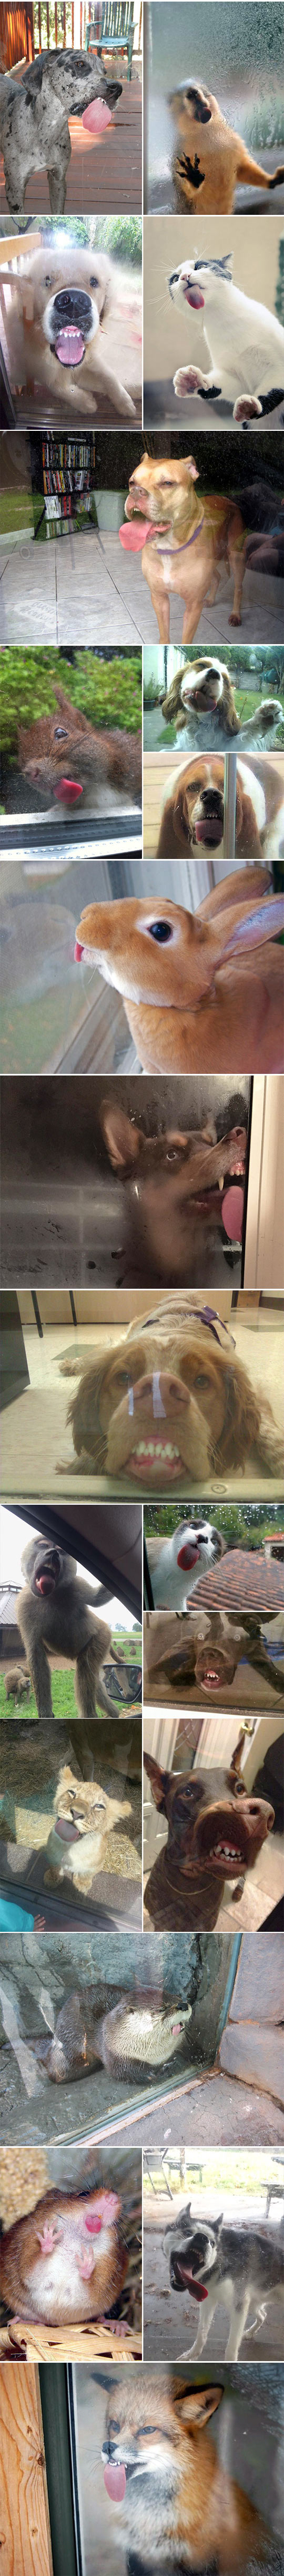 funny-animals-lick-glass-windows